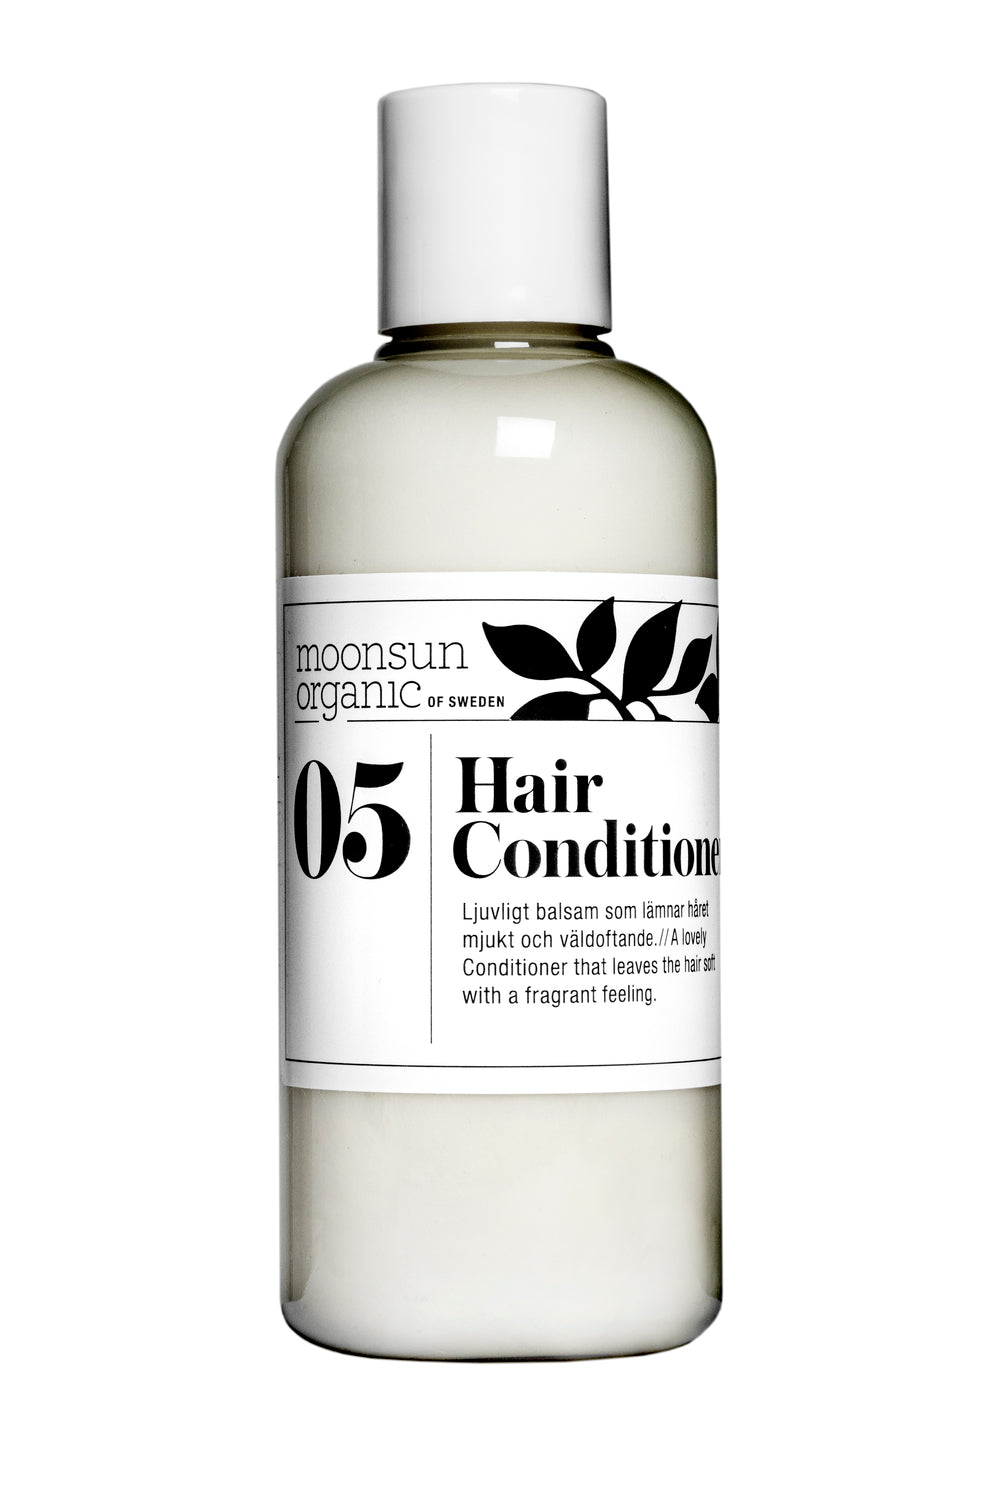 Moonsun Organic Hair Conditioner